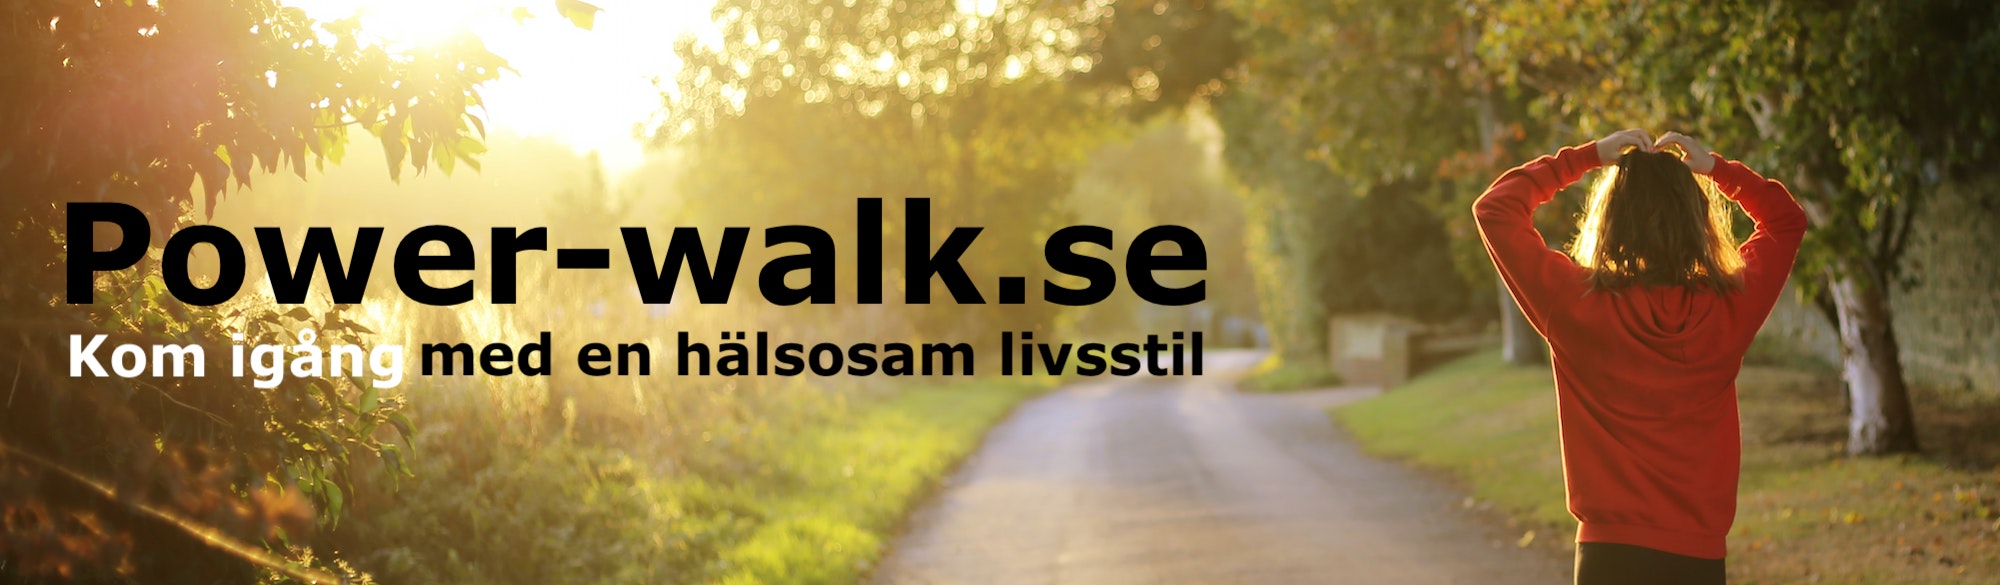 Power-walk.se